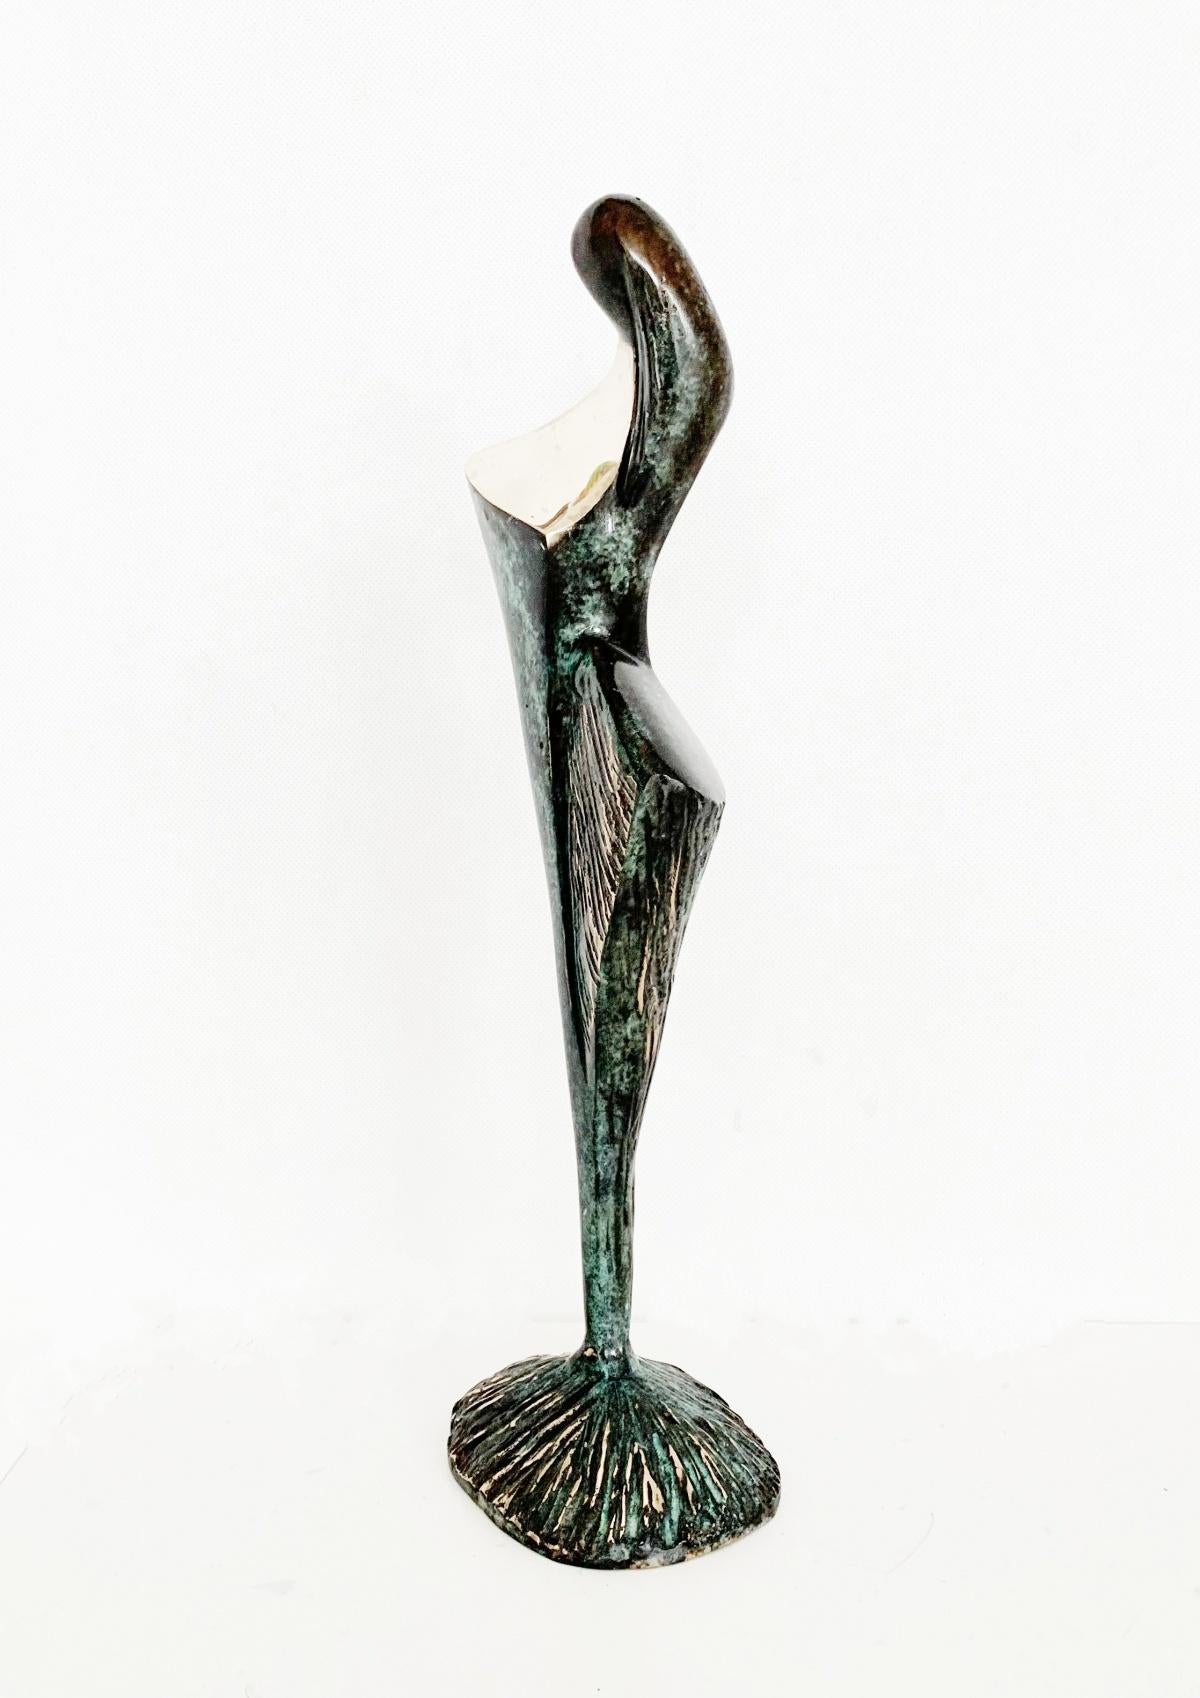 Dame 9 - Contemporary bronze sculpture, Abstract & figurative, Polish art - Sculpture by Stanisław Wysocki